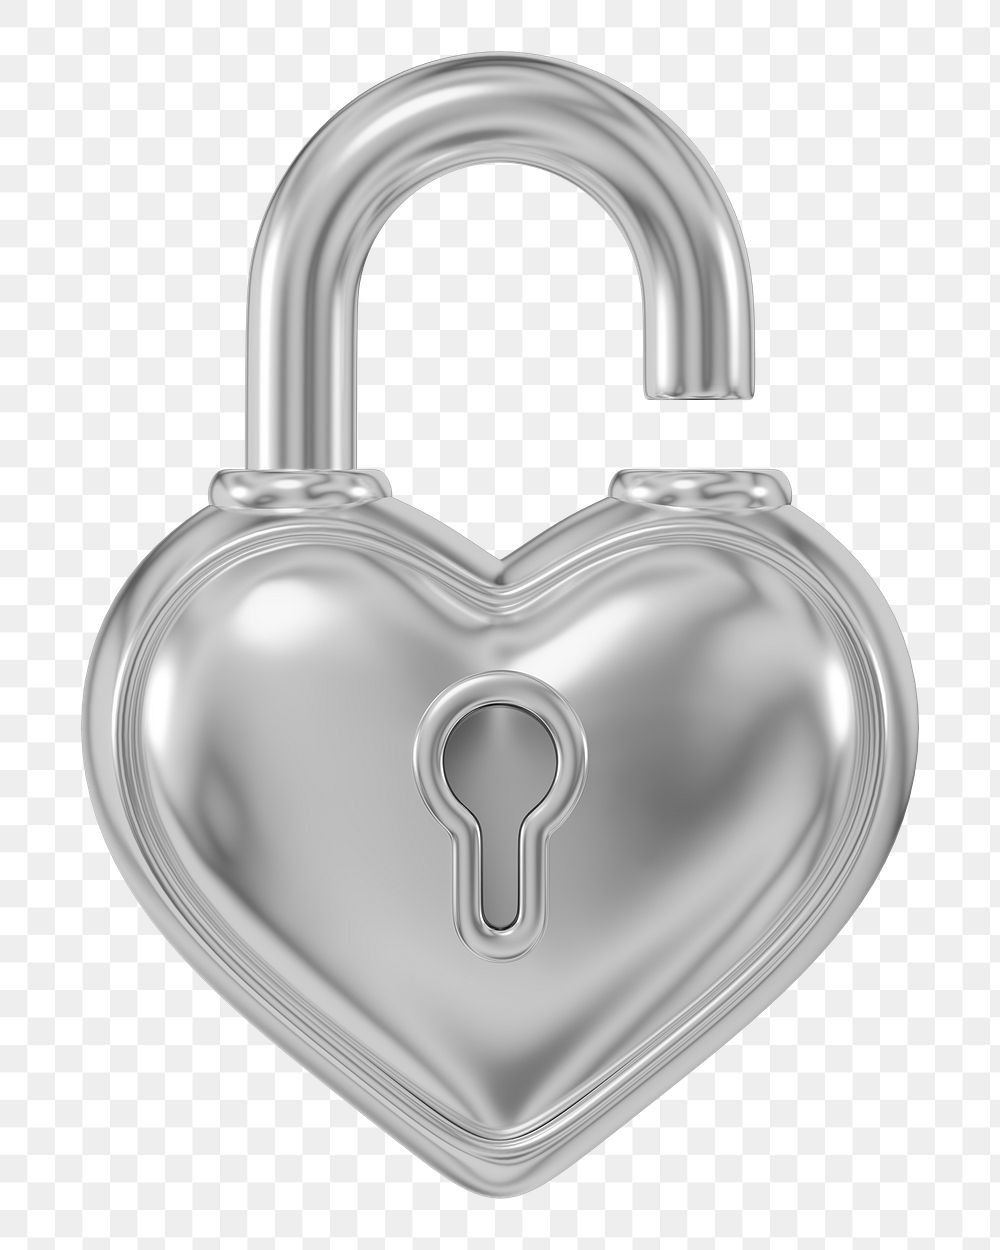 Silver heart padlock png 3D element, transparent background